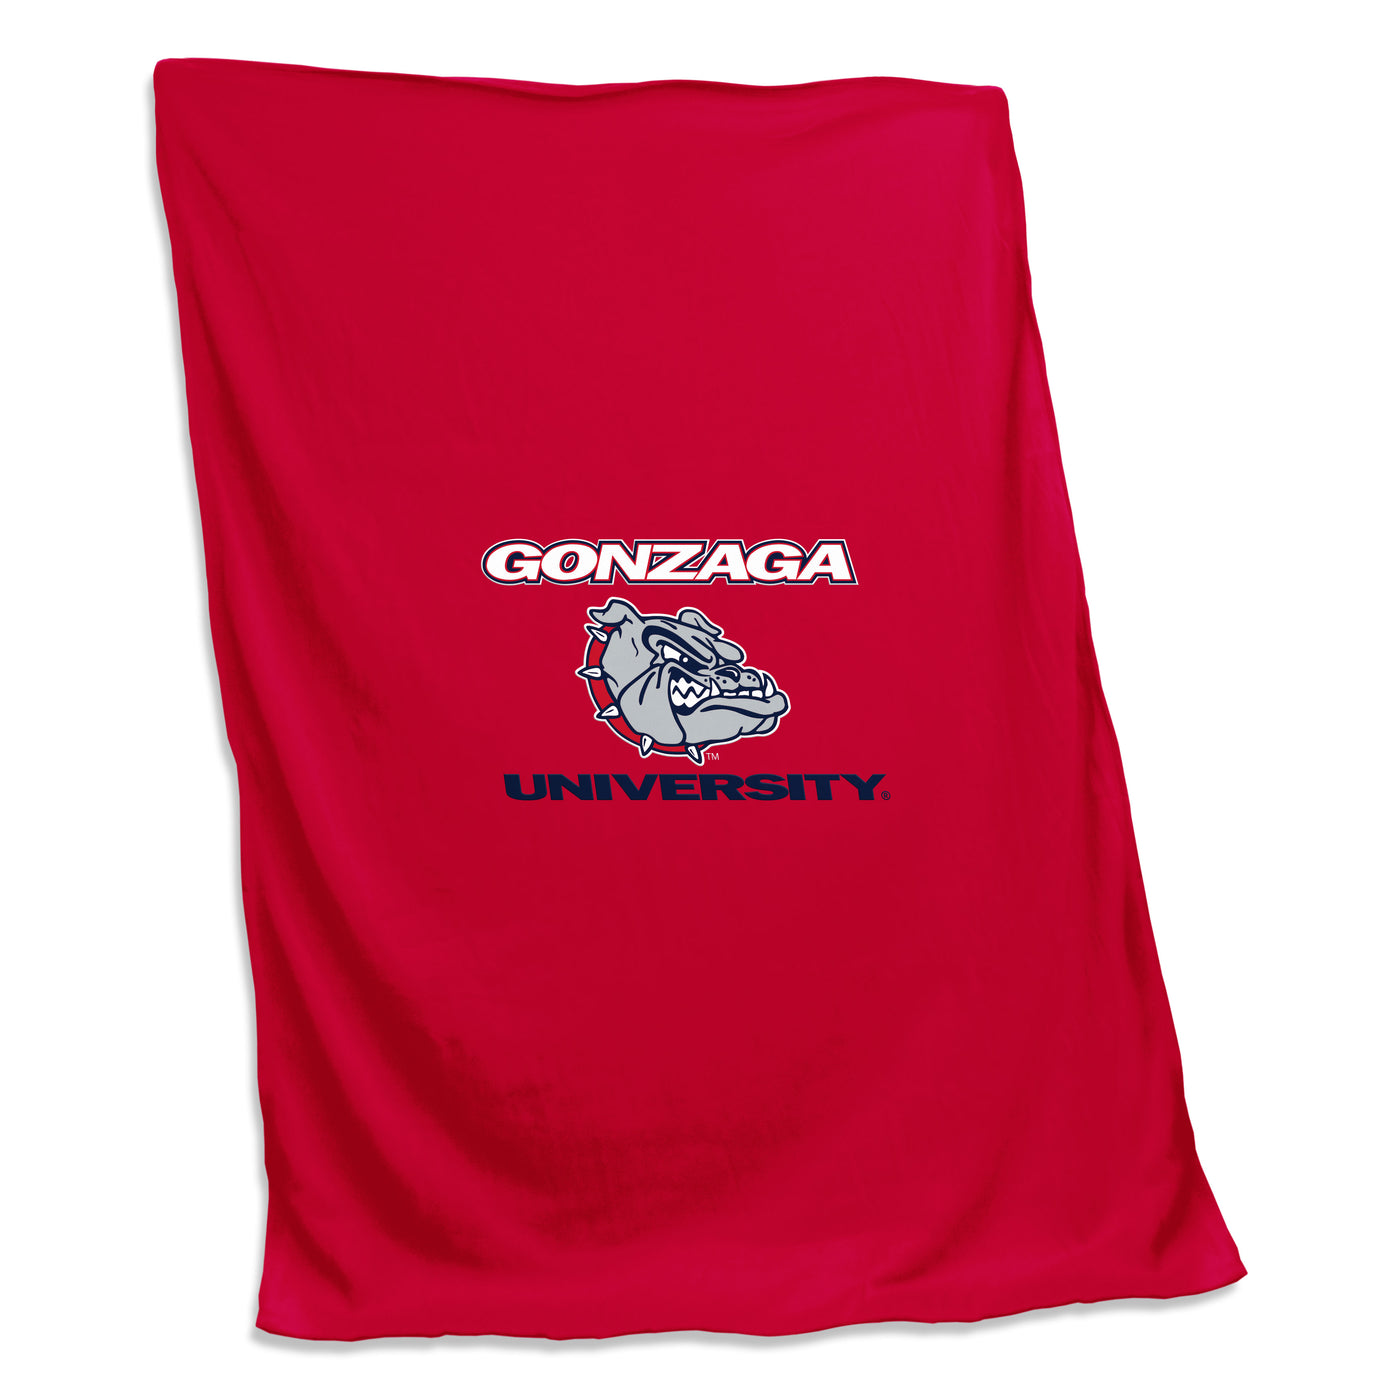 Gonzaga Screened Sweatshirt Blanket